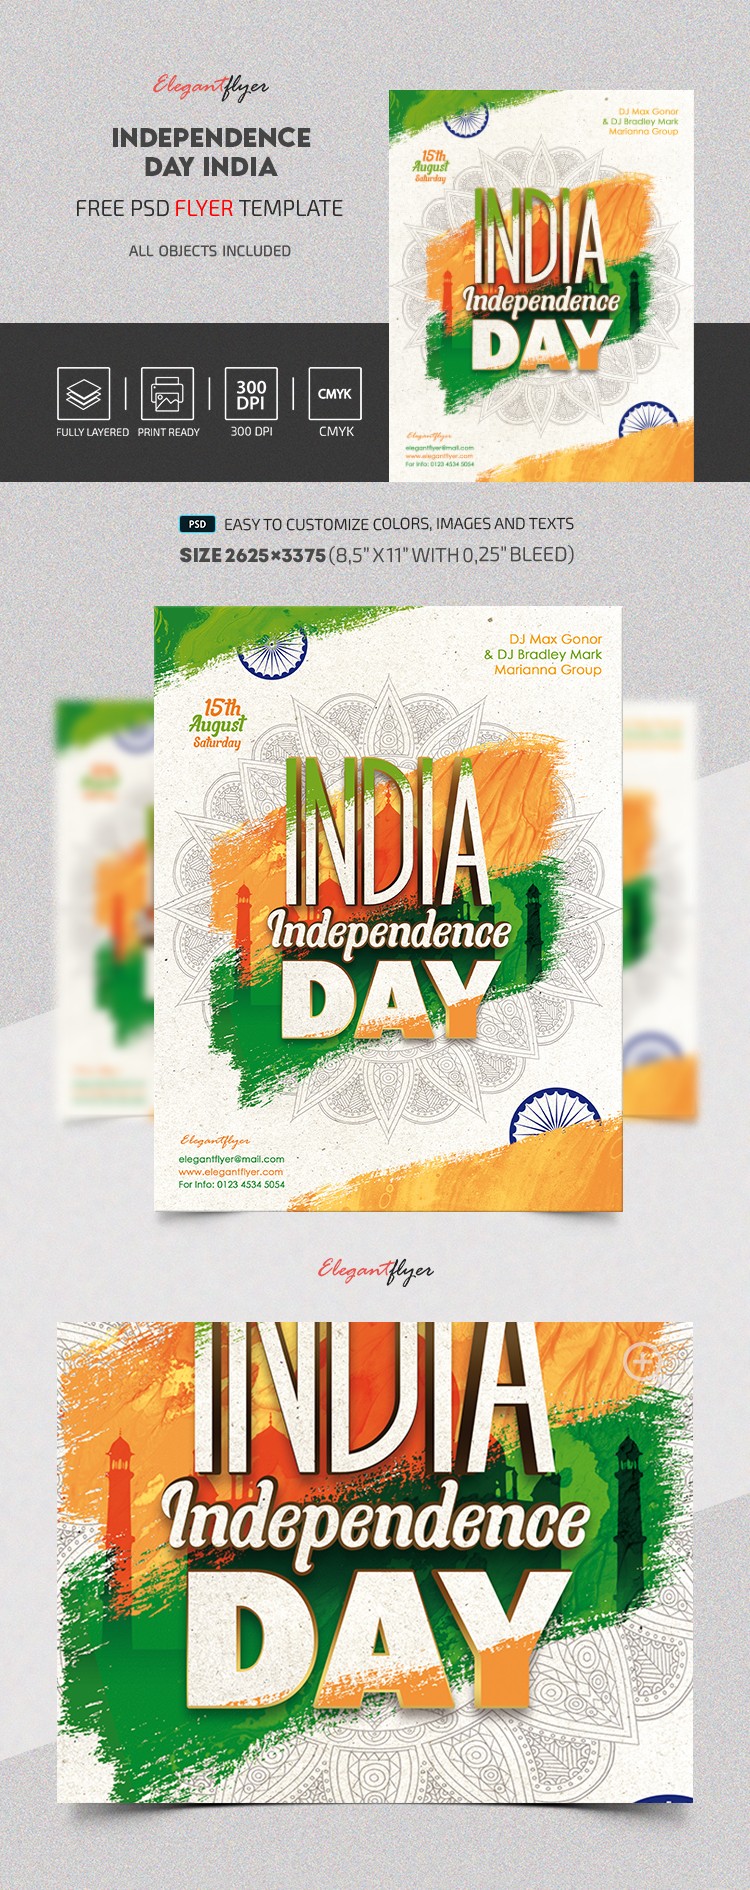 Independence Day India Flyer by ElegantFlyer